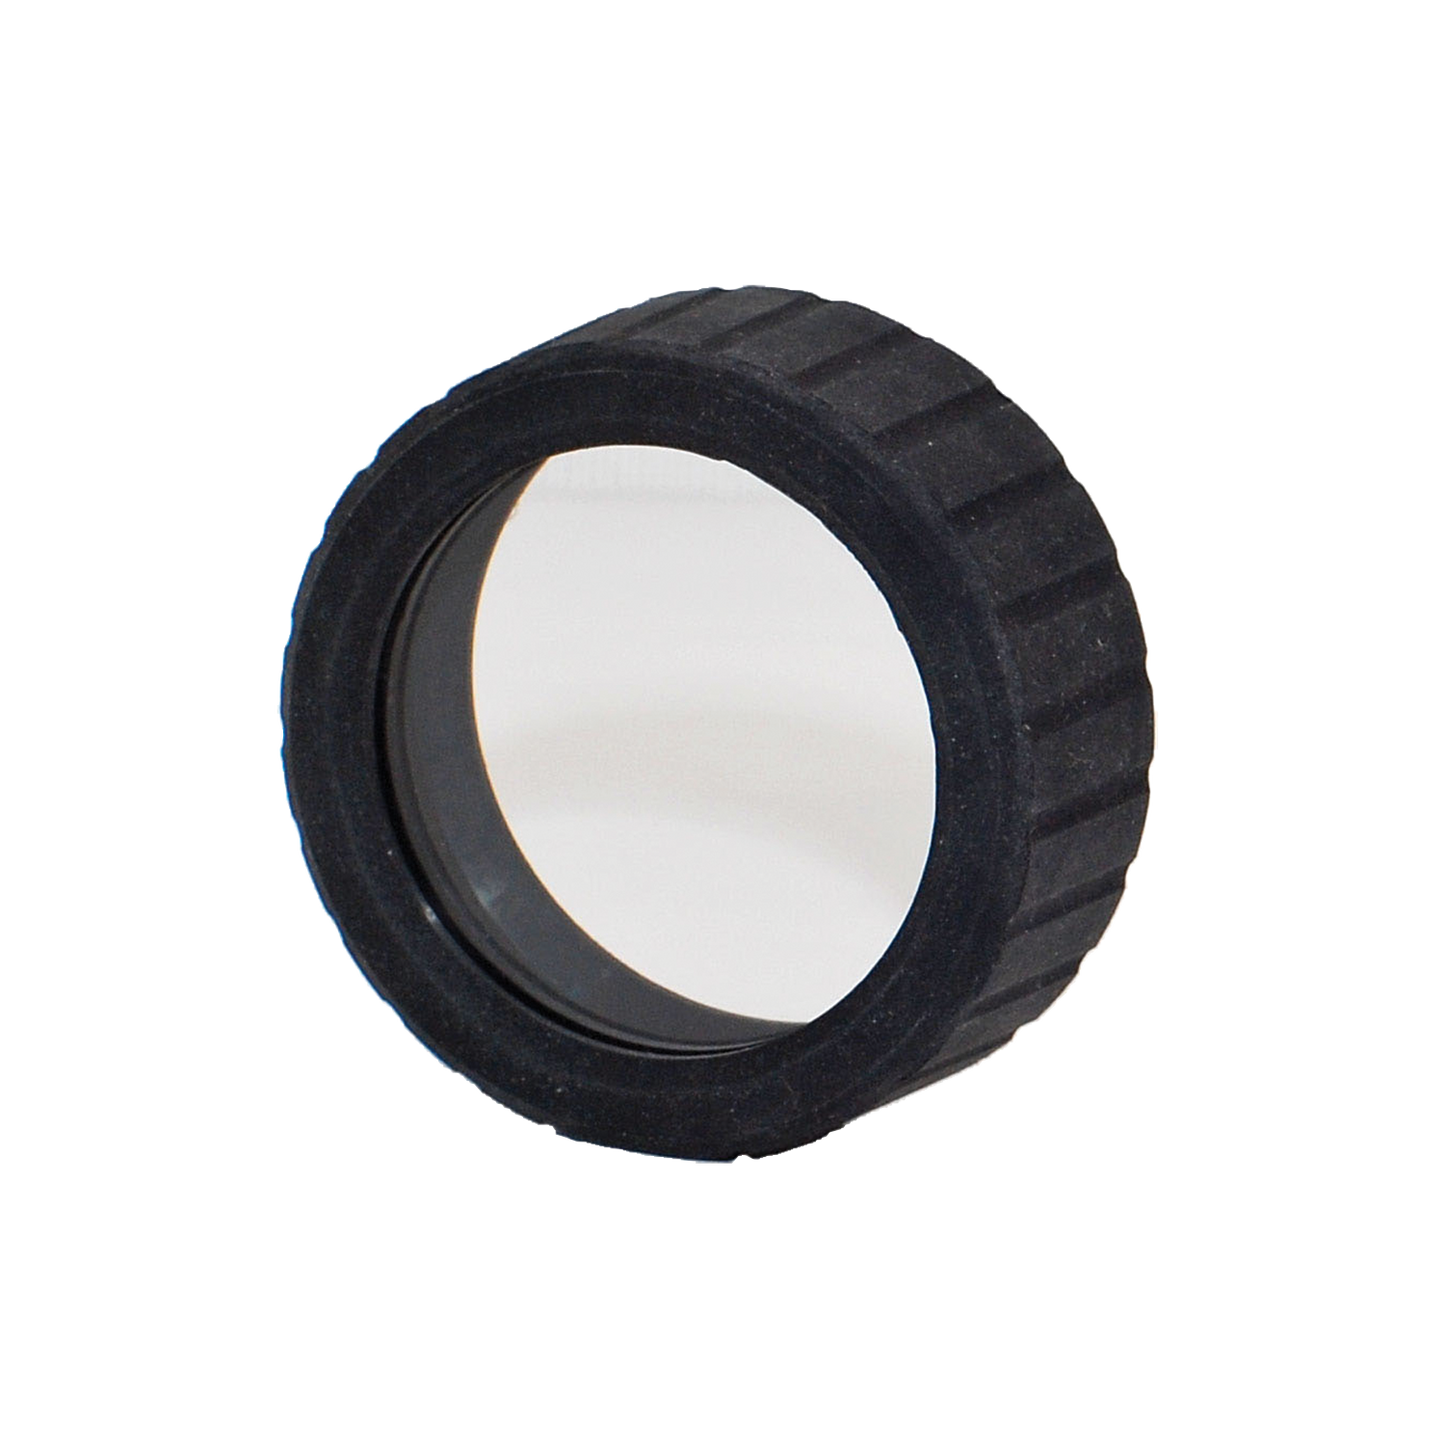 uVision Borofloat Filter Protector For Models UV-365EH, UV-365ES, UV-365HC, UV-365HCR, UV-365MEH, UV-365MHC, UV-365MSBLC, UV-365SBLC, UV-365ZEH, UV-365ZHC, and UV-365ZSBLC